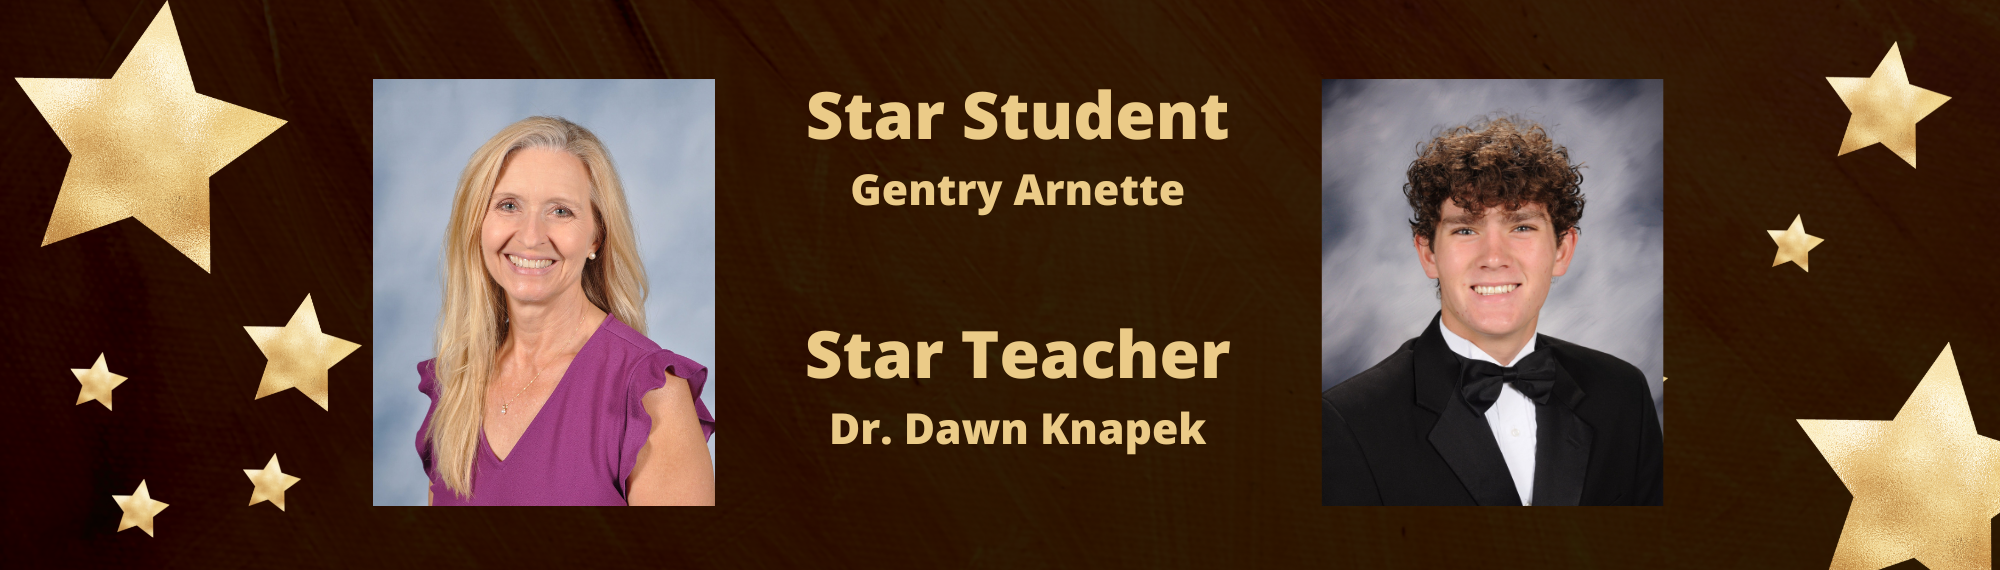 Star Teacher and student